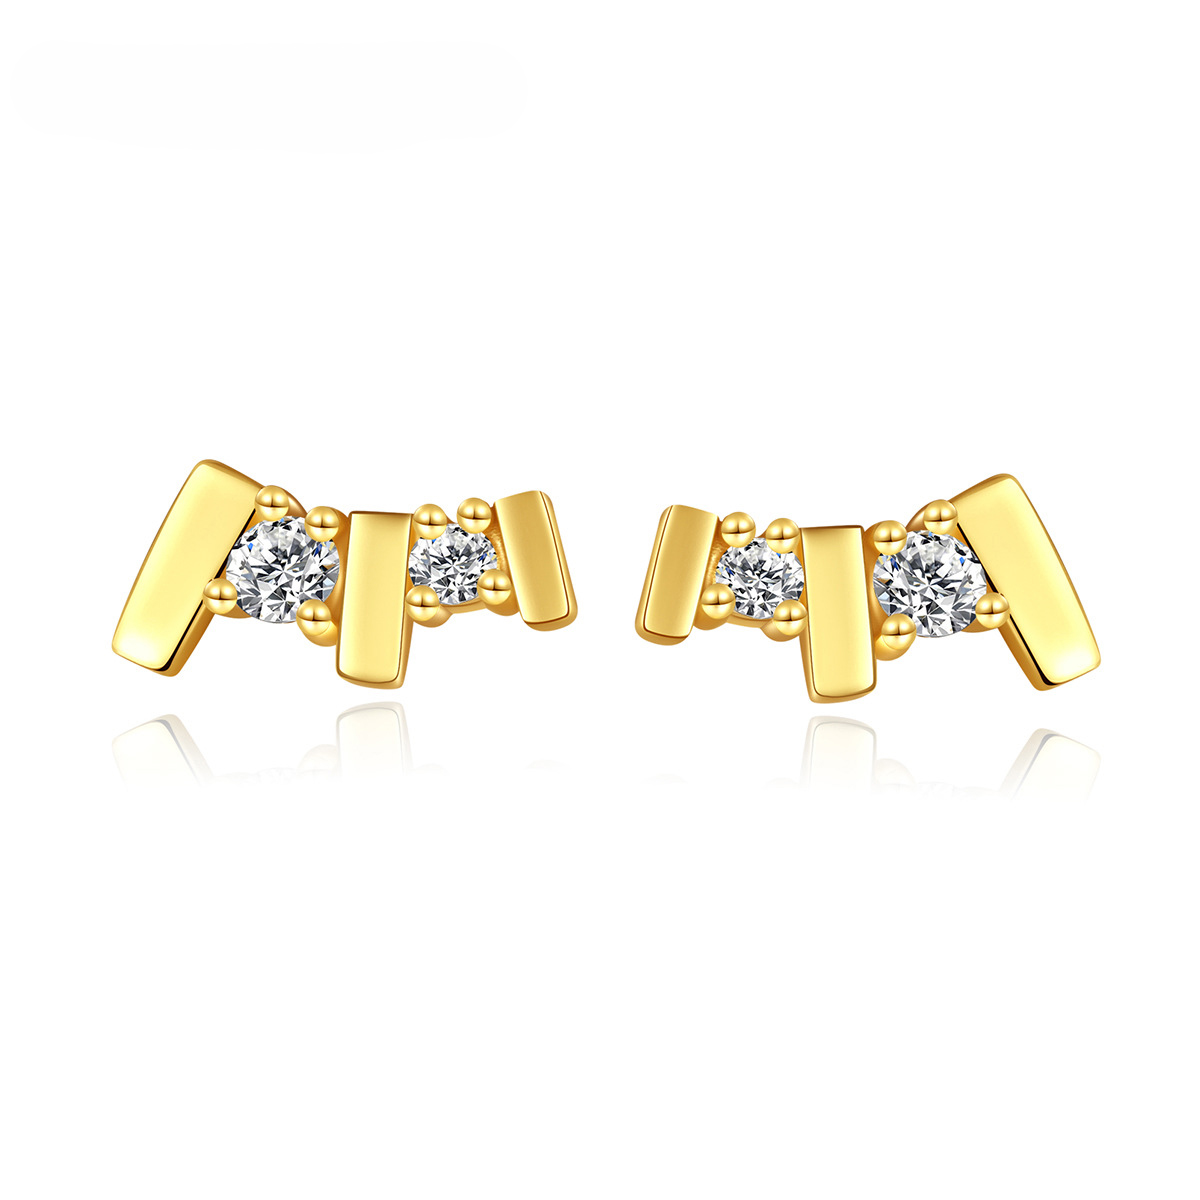 Cz 14K Gold PlatedGeometric Diamond Inserts Sterling Silver Stud Earrings